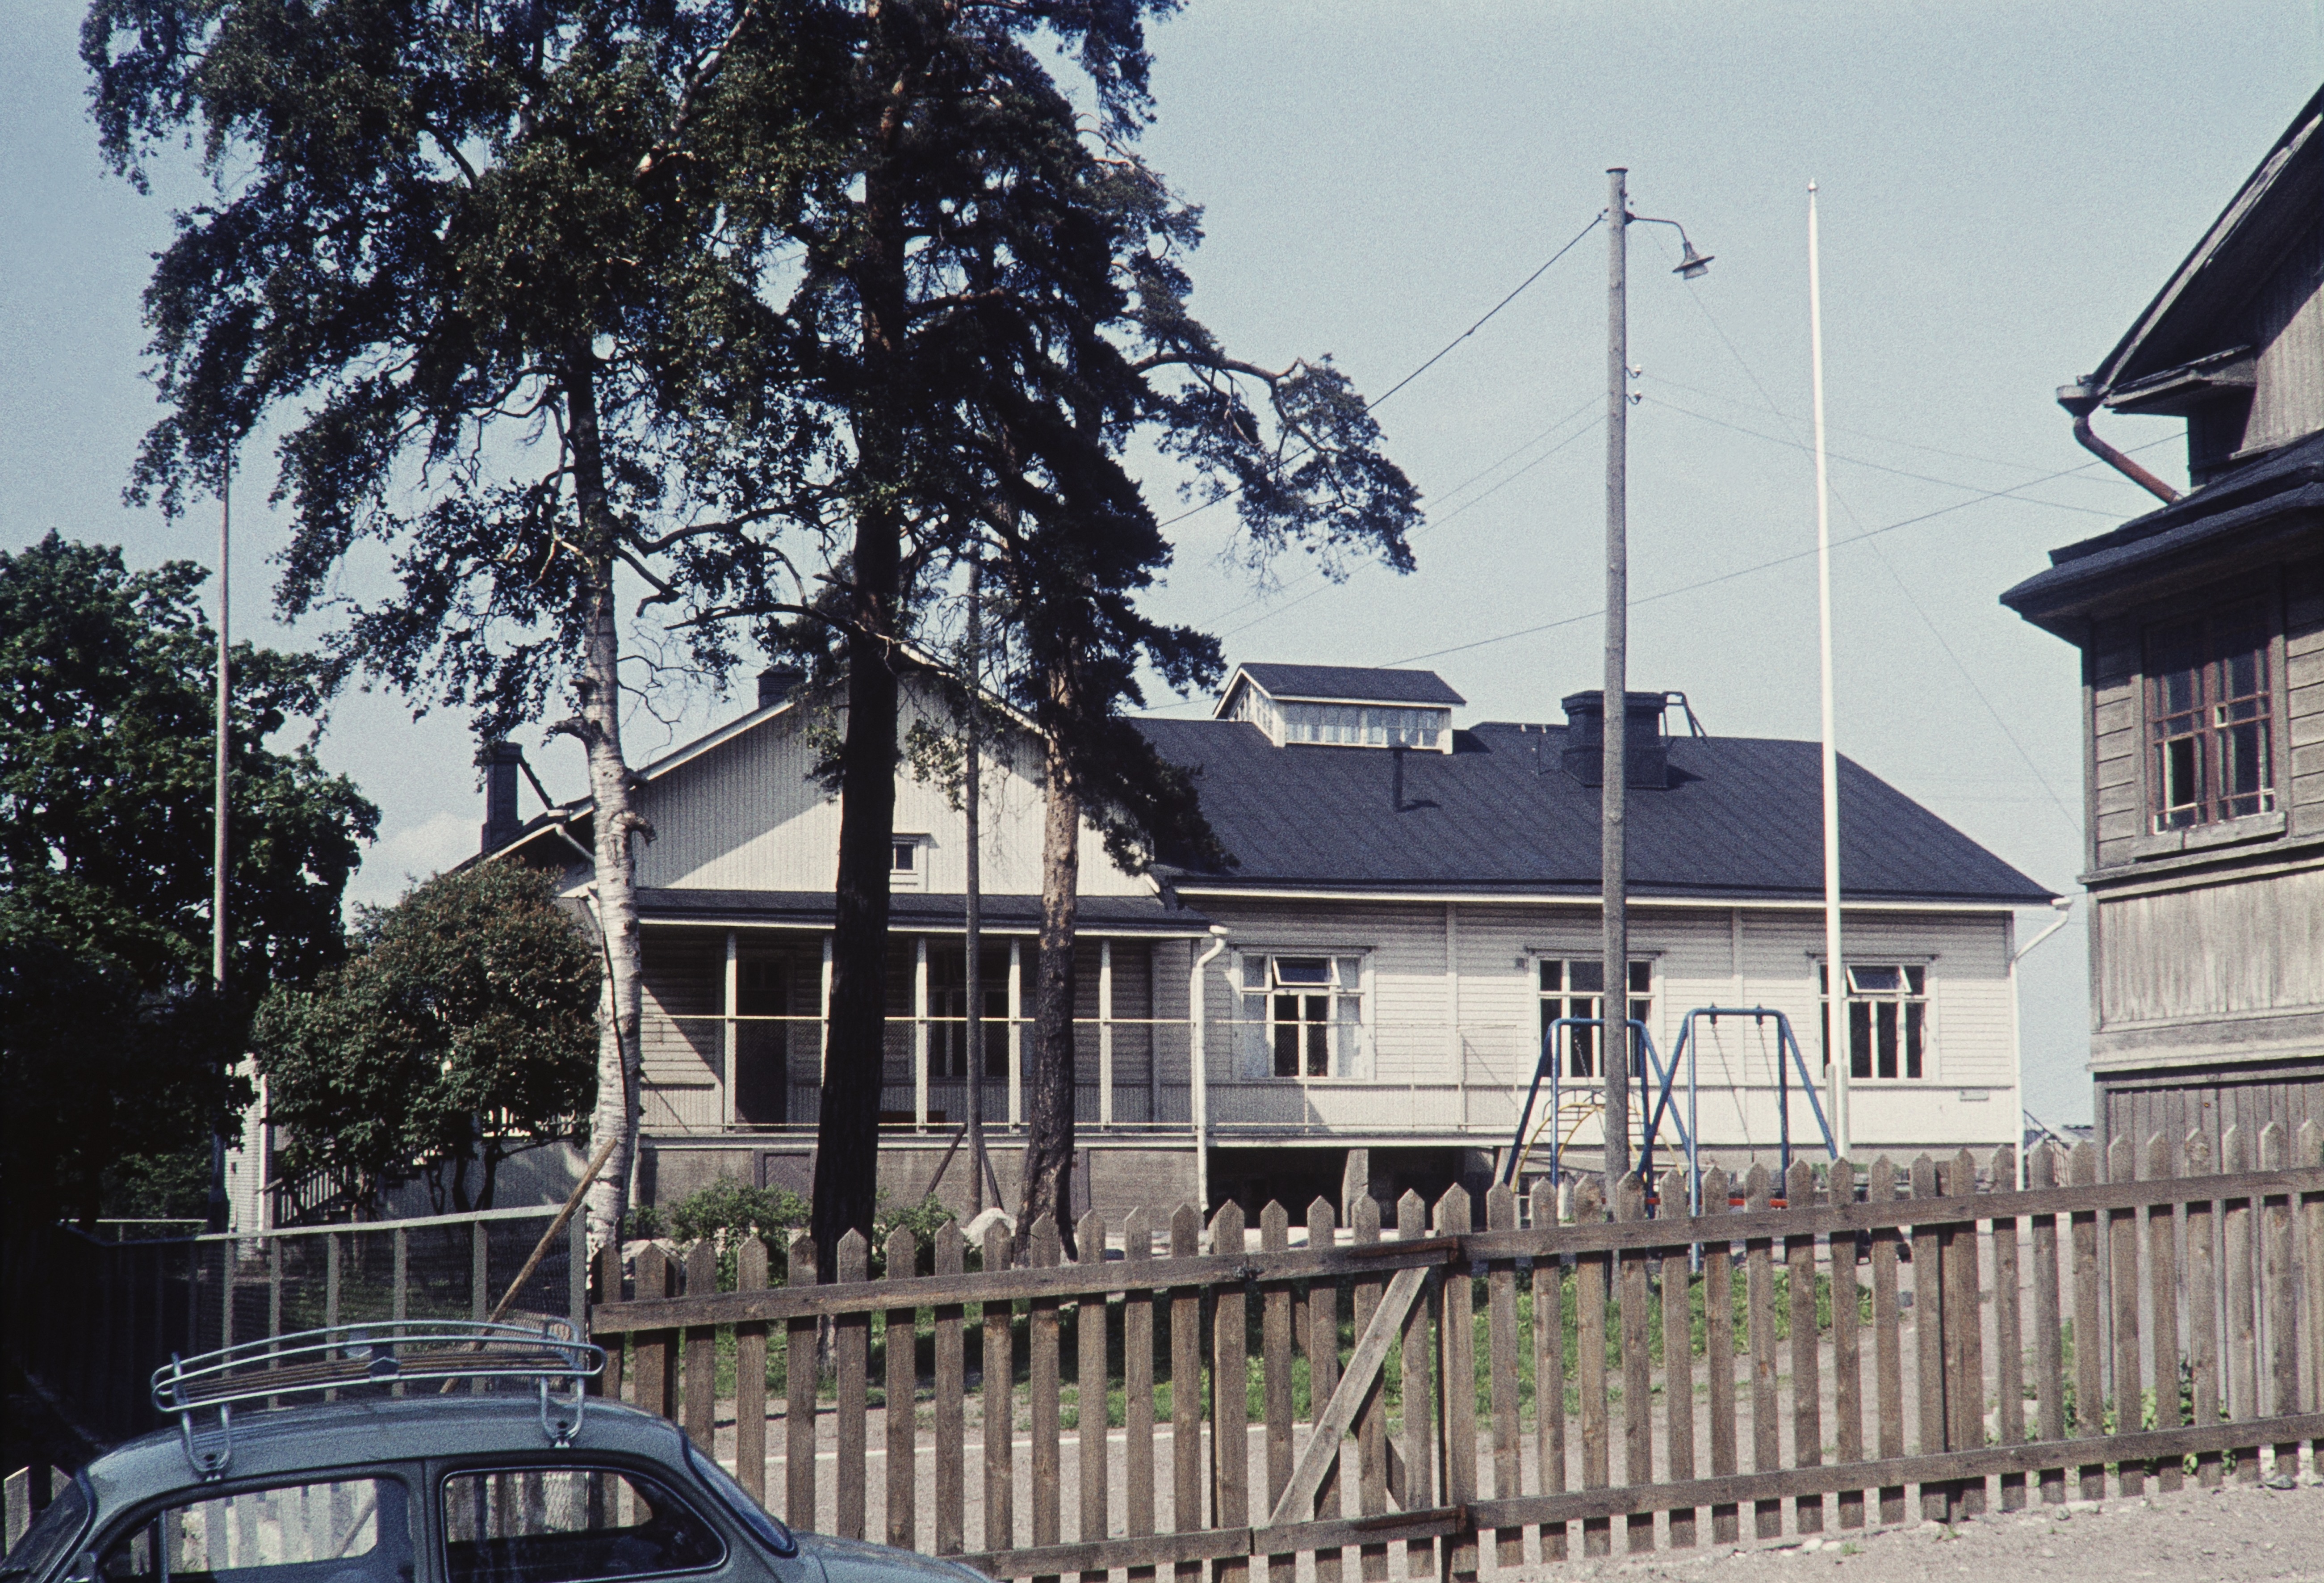 Hermannin nuorisoseurantalo, Saarenkatu 4. Puuaidan takana harjakattoinen nuorisoseurantalo. Talo on purettu vuonna 1970.